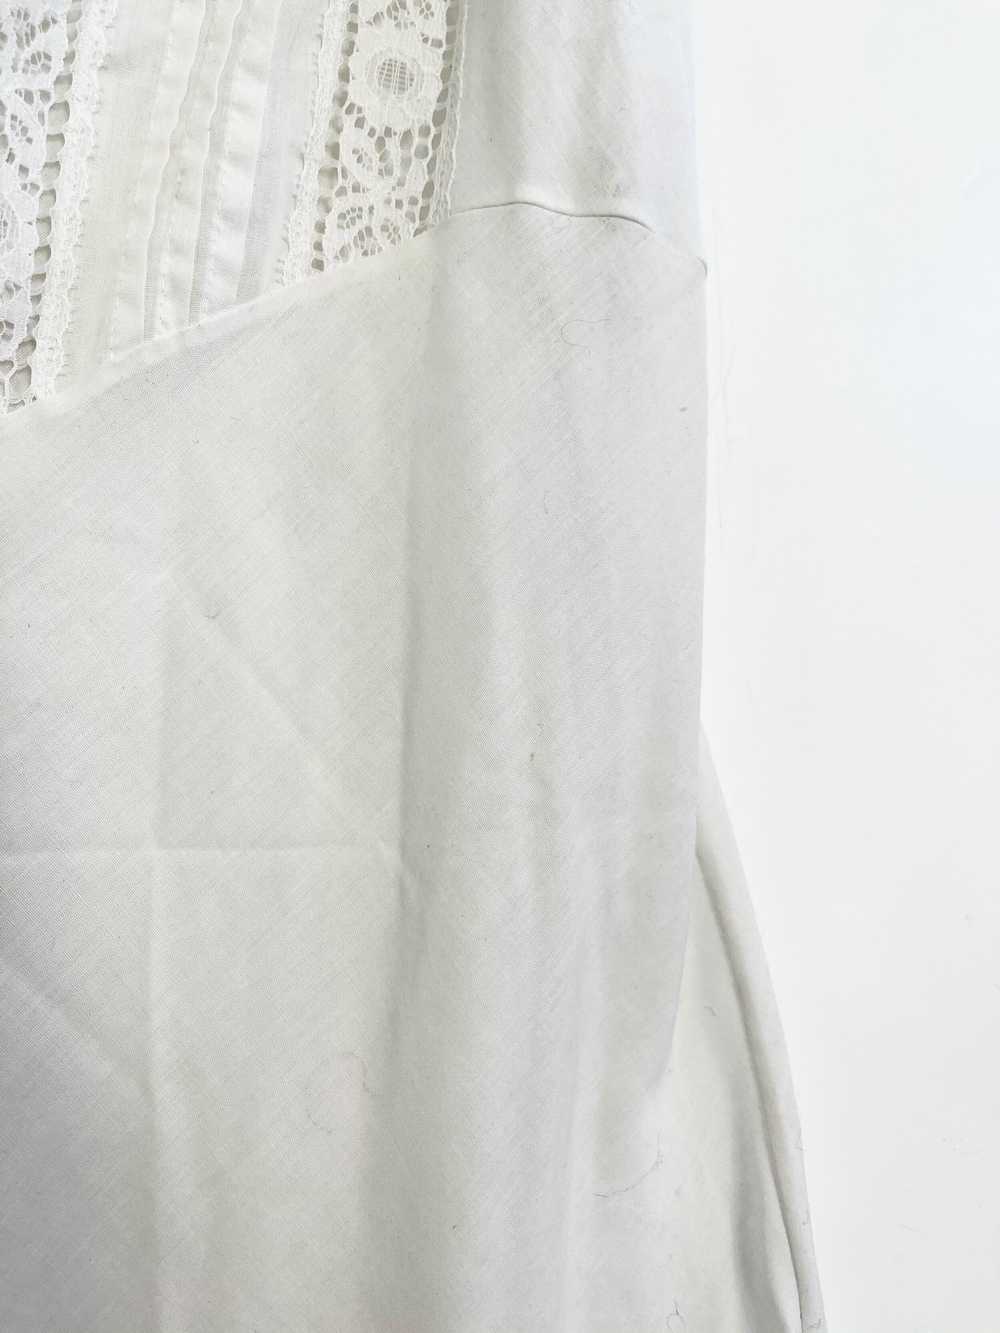 White Cotton Lace Slip Dress - image 4